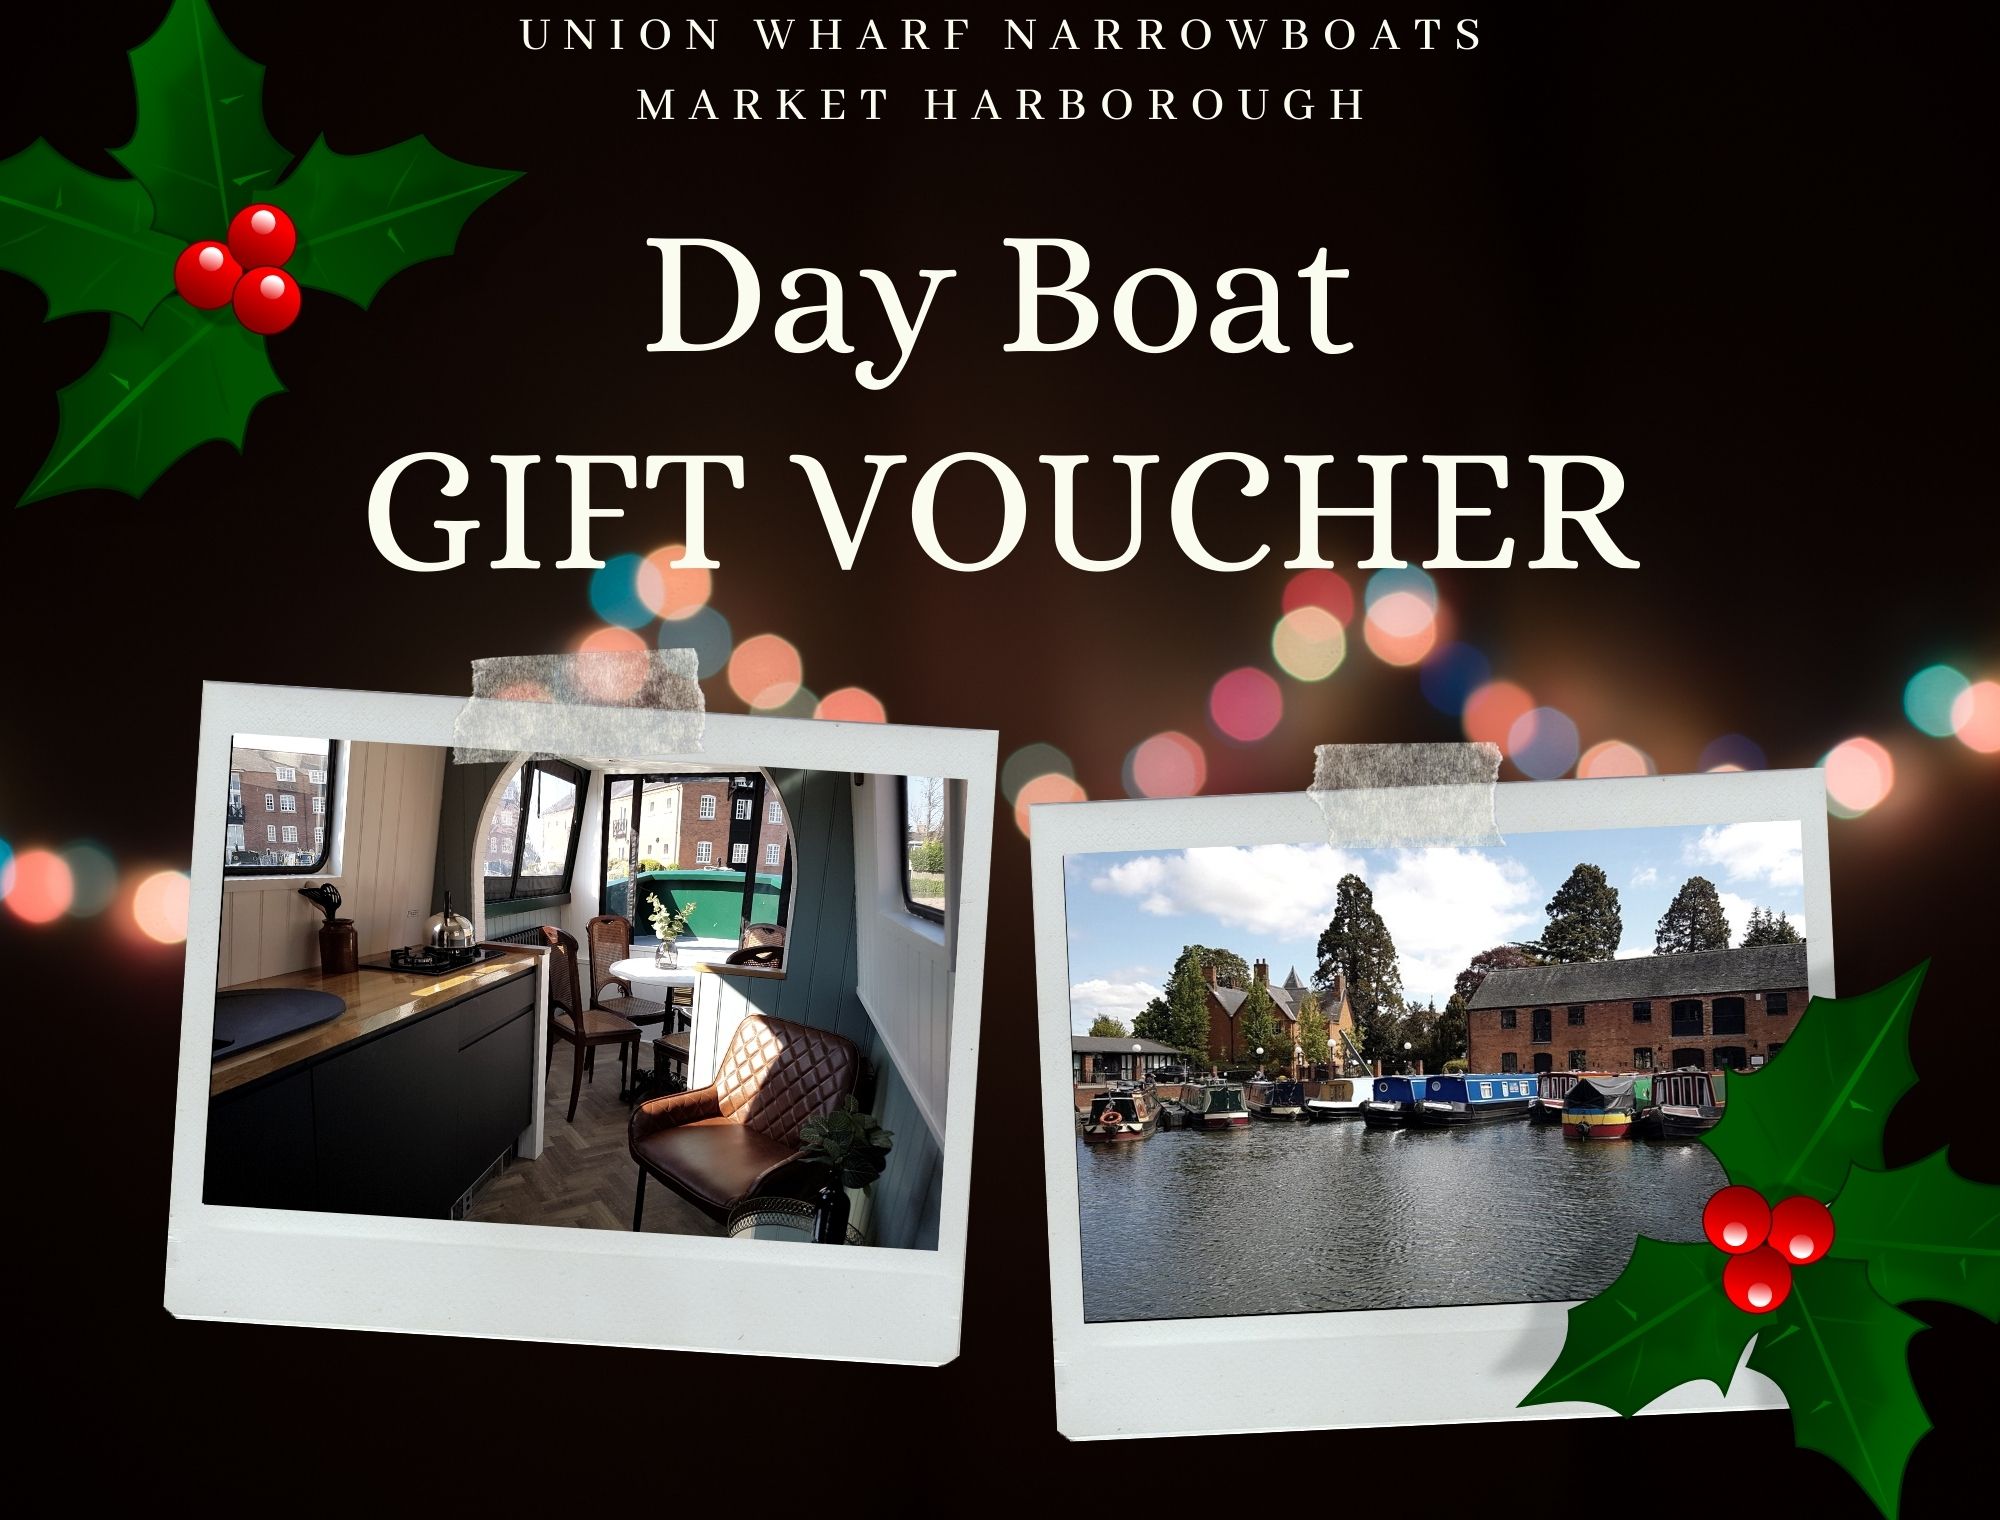 windermere lake cruises gift vouchers